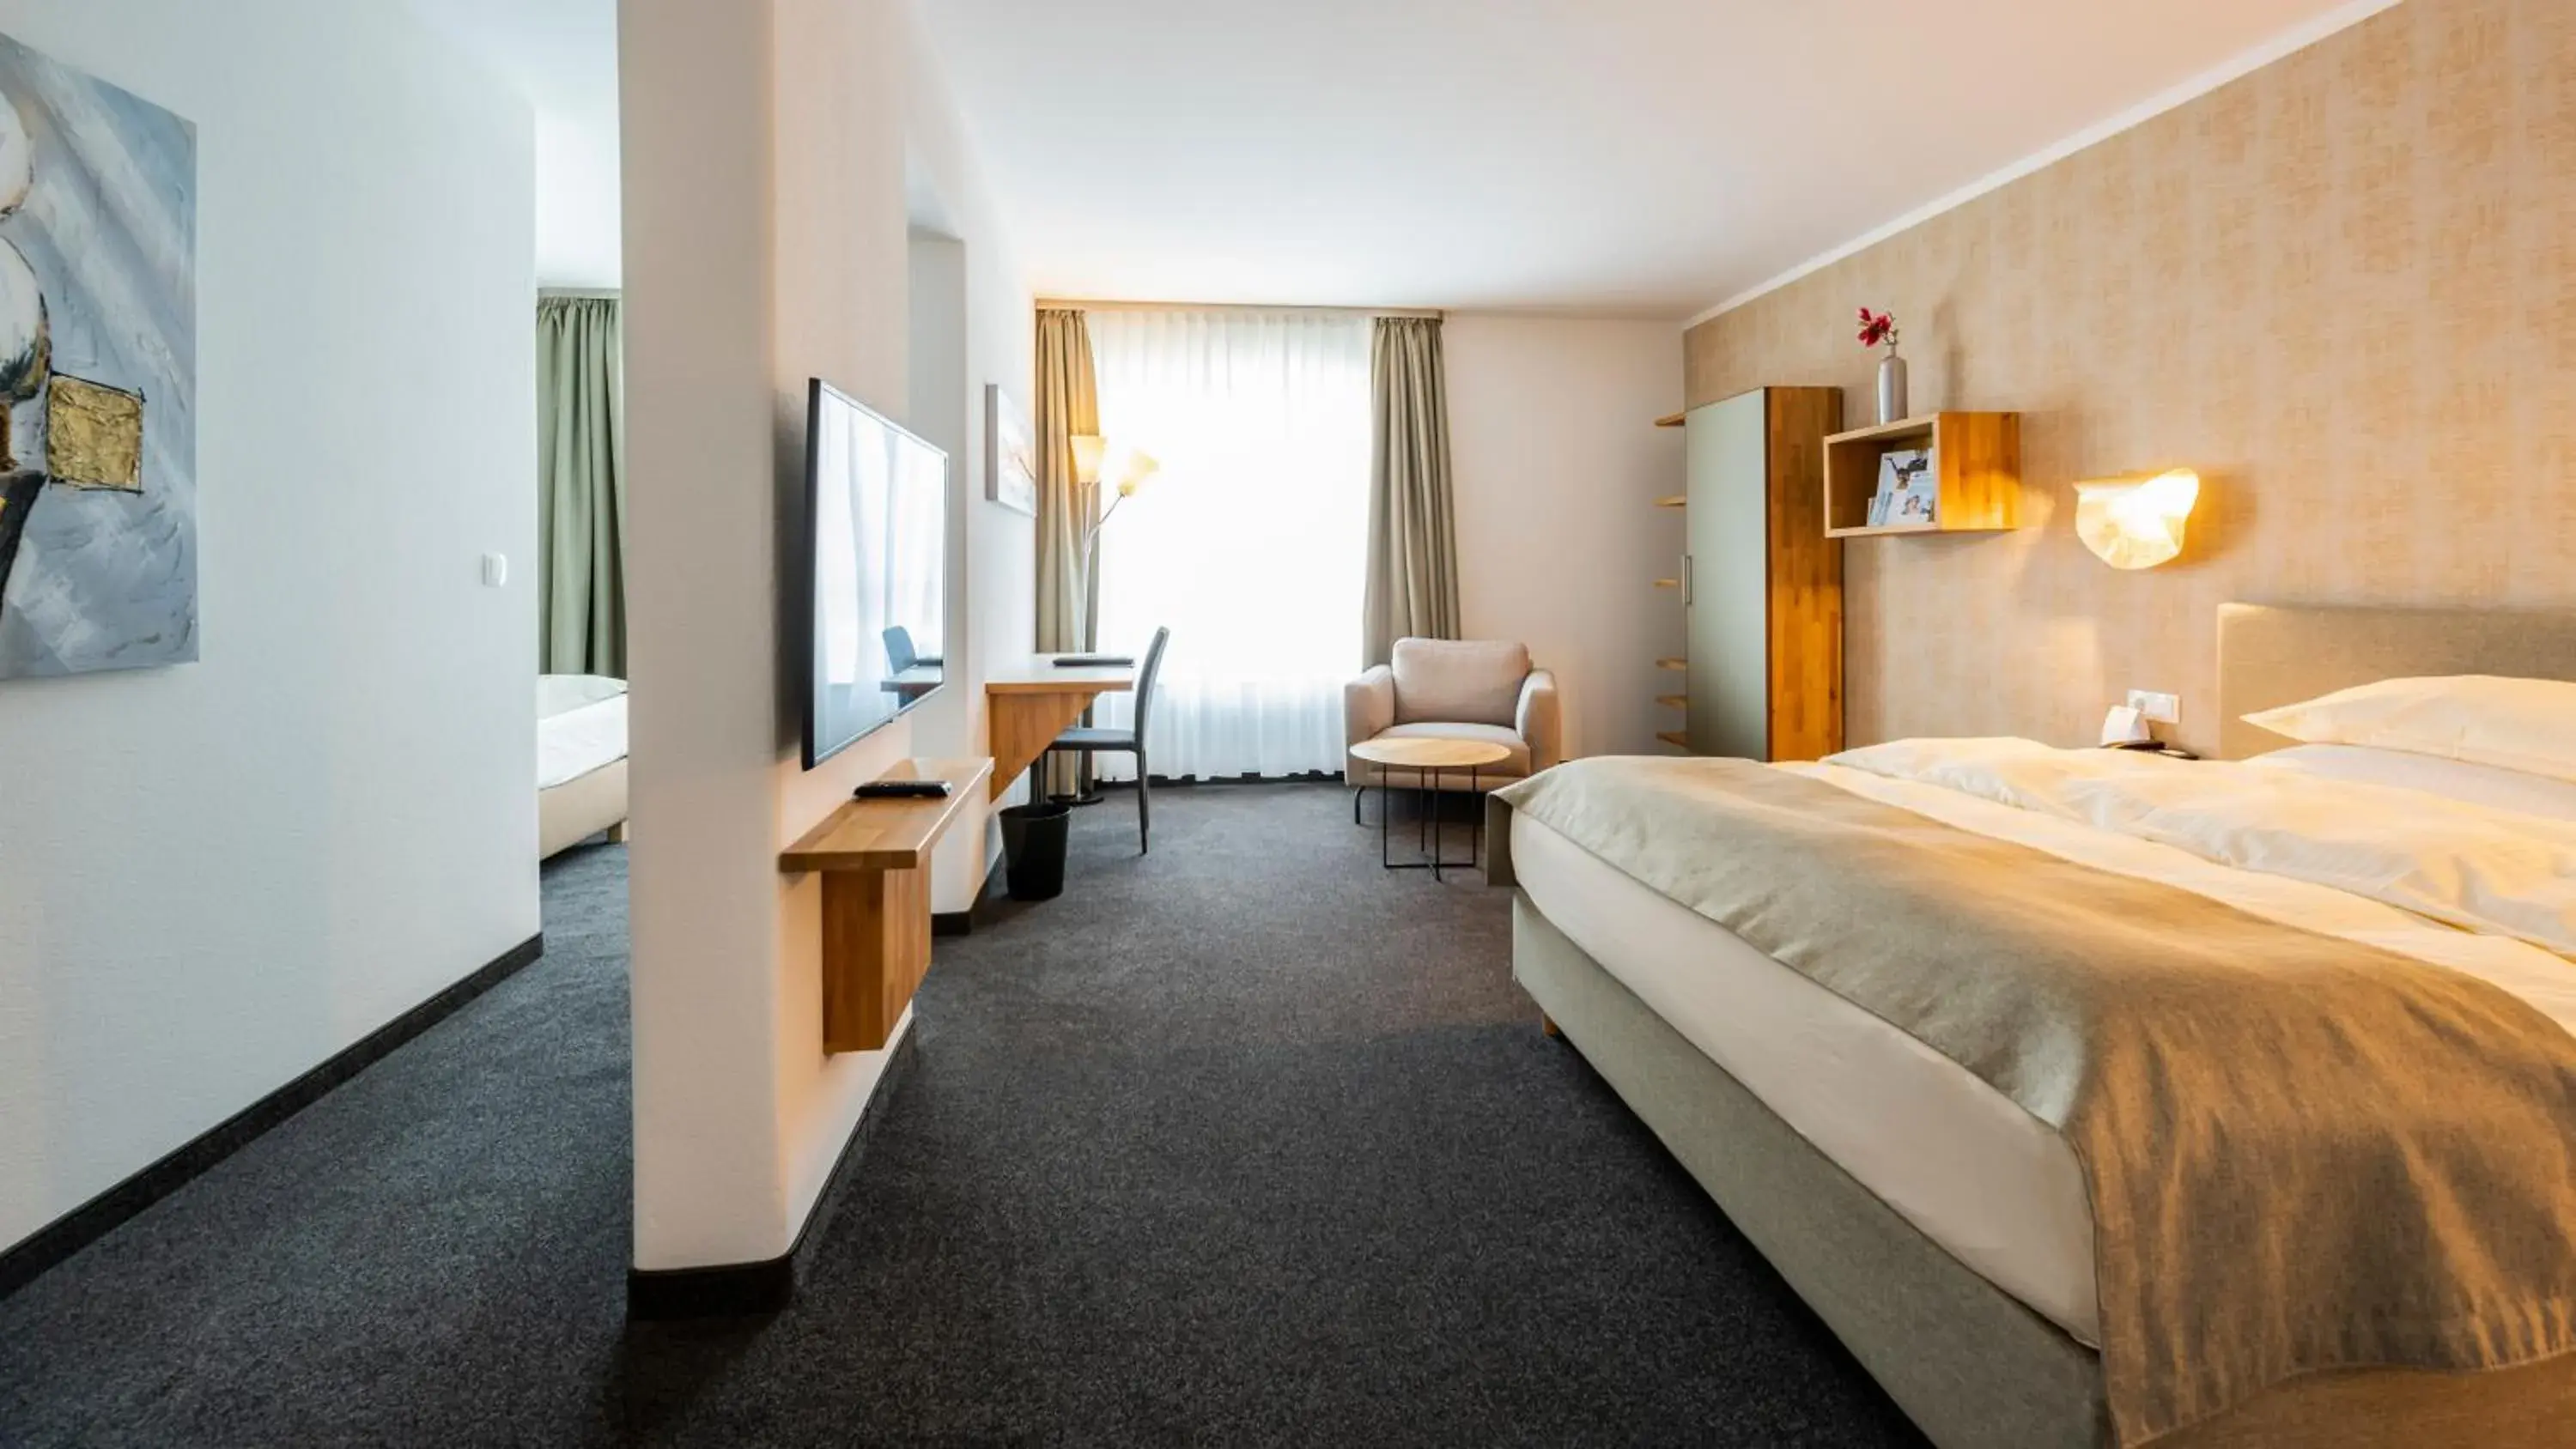 Staff, Bed in Best Western Plus iO Hotel